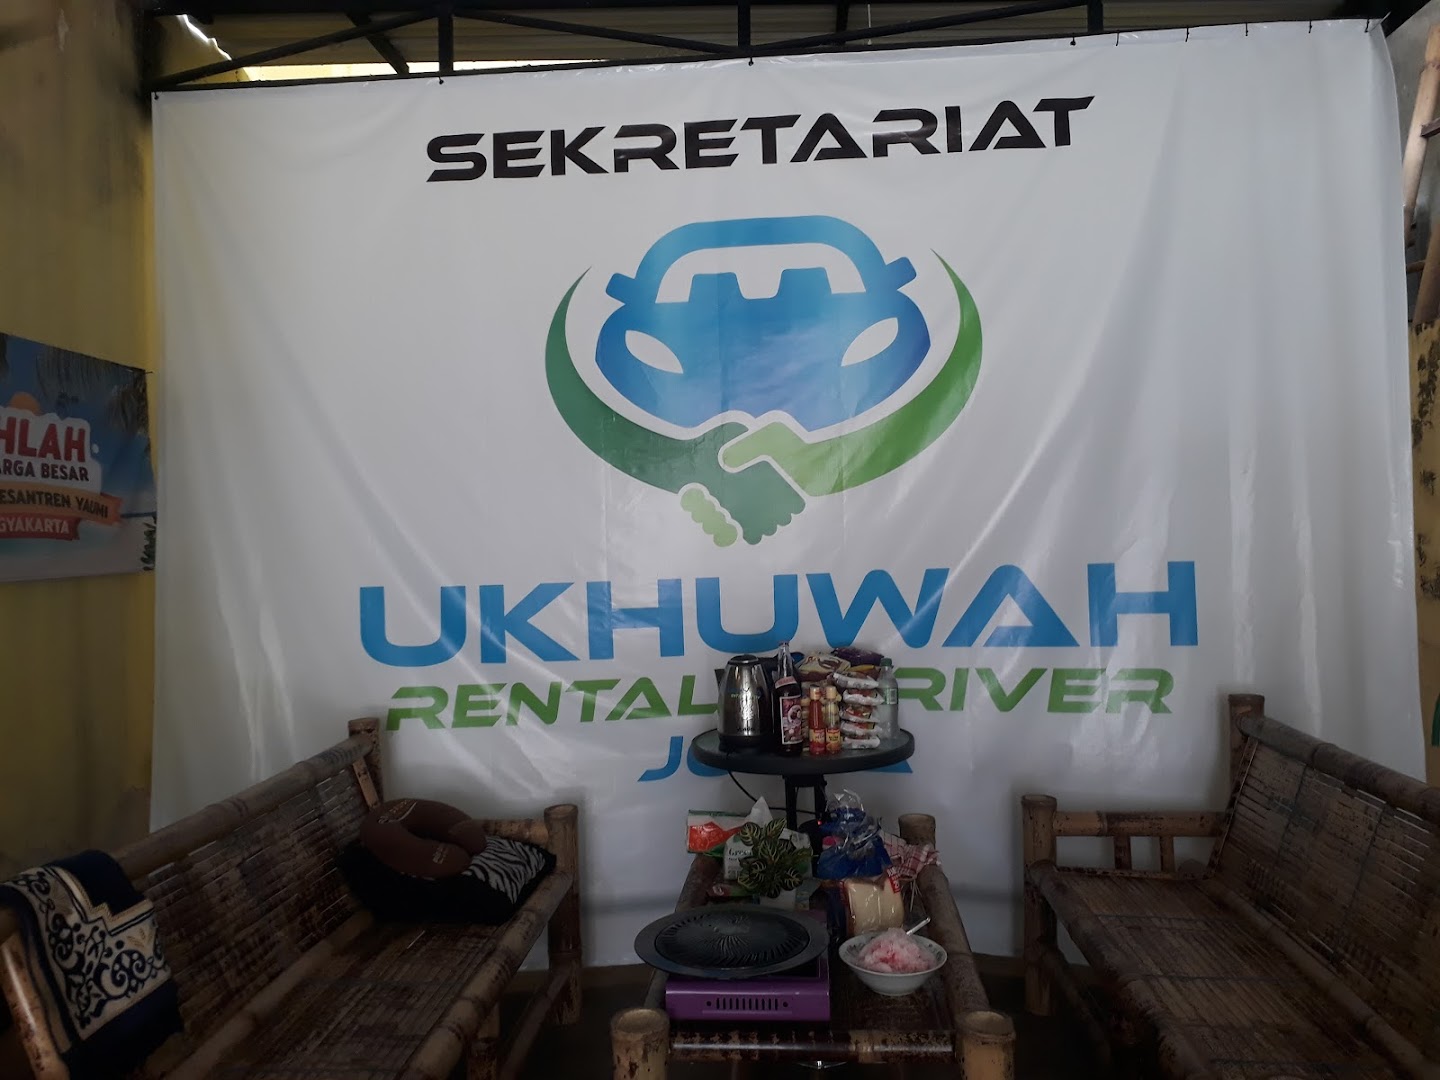 Sekretariat Ukhuwah Rental & Driver Jogja Photo